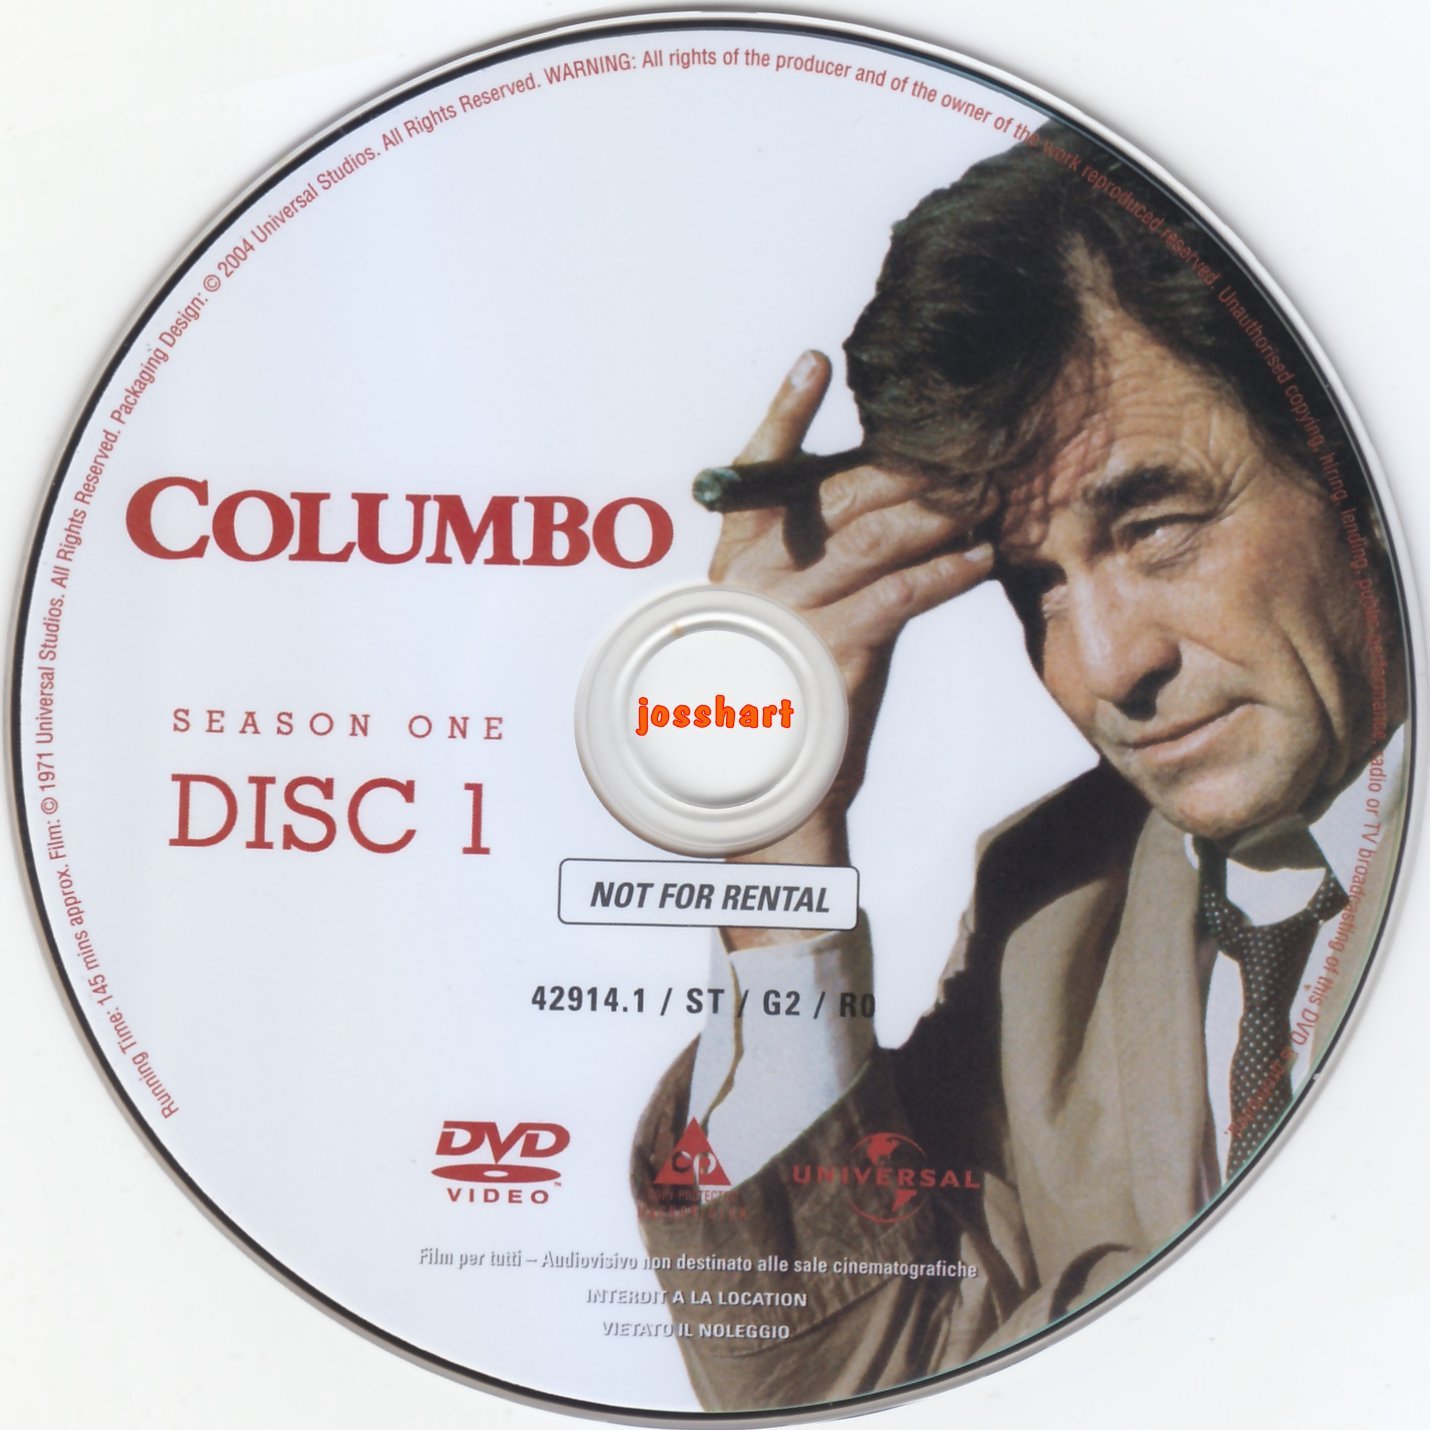 Columbo S1 DISC1